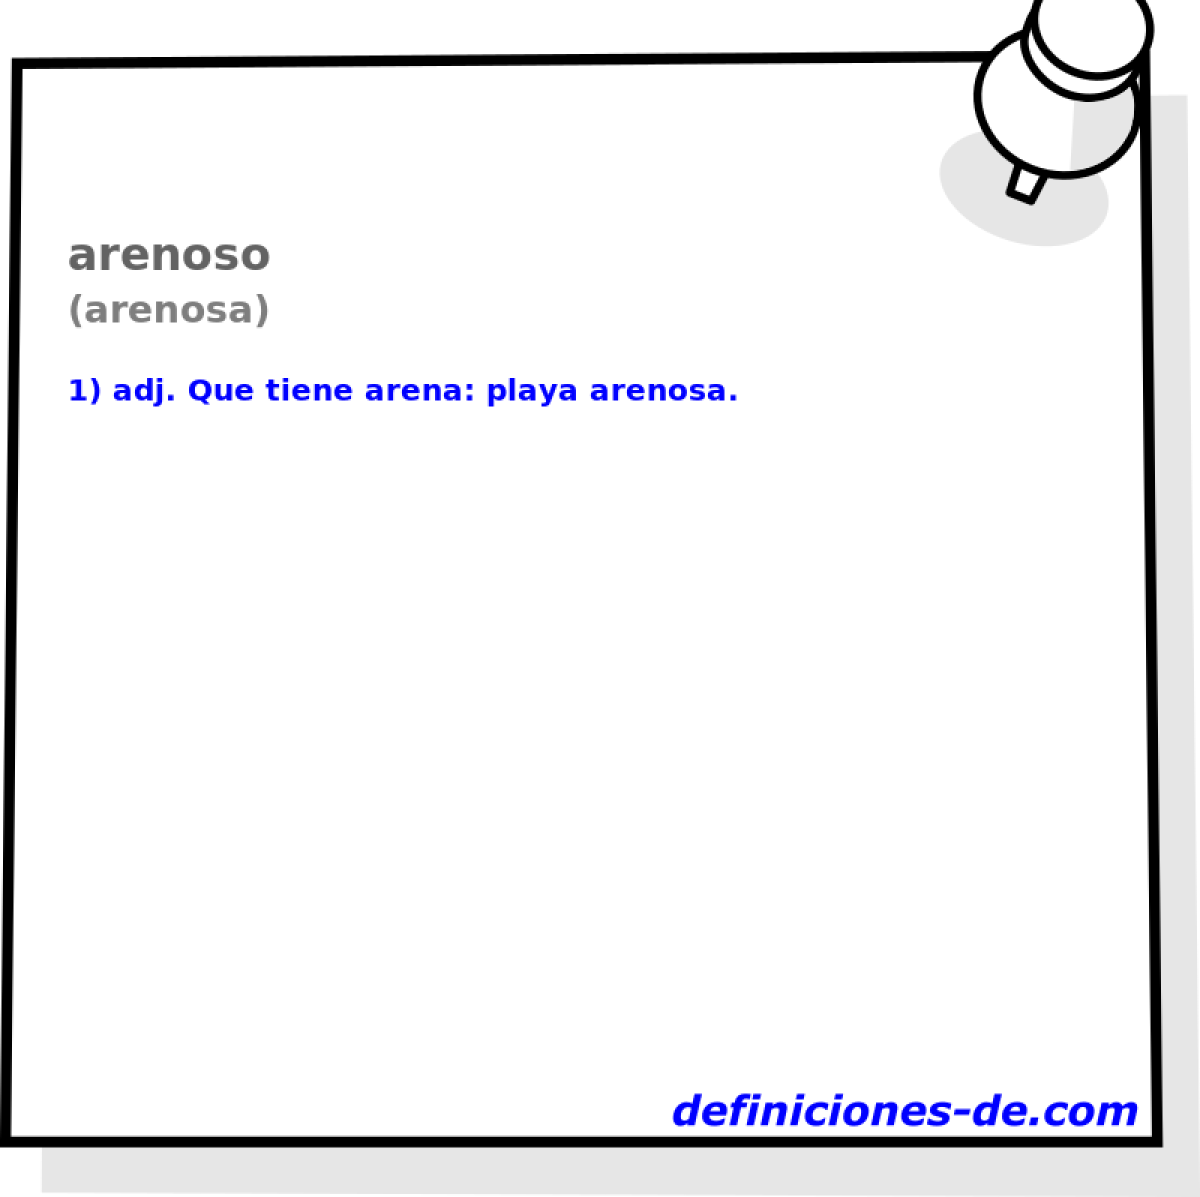 arenoso (arenosa)